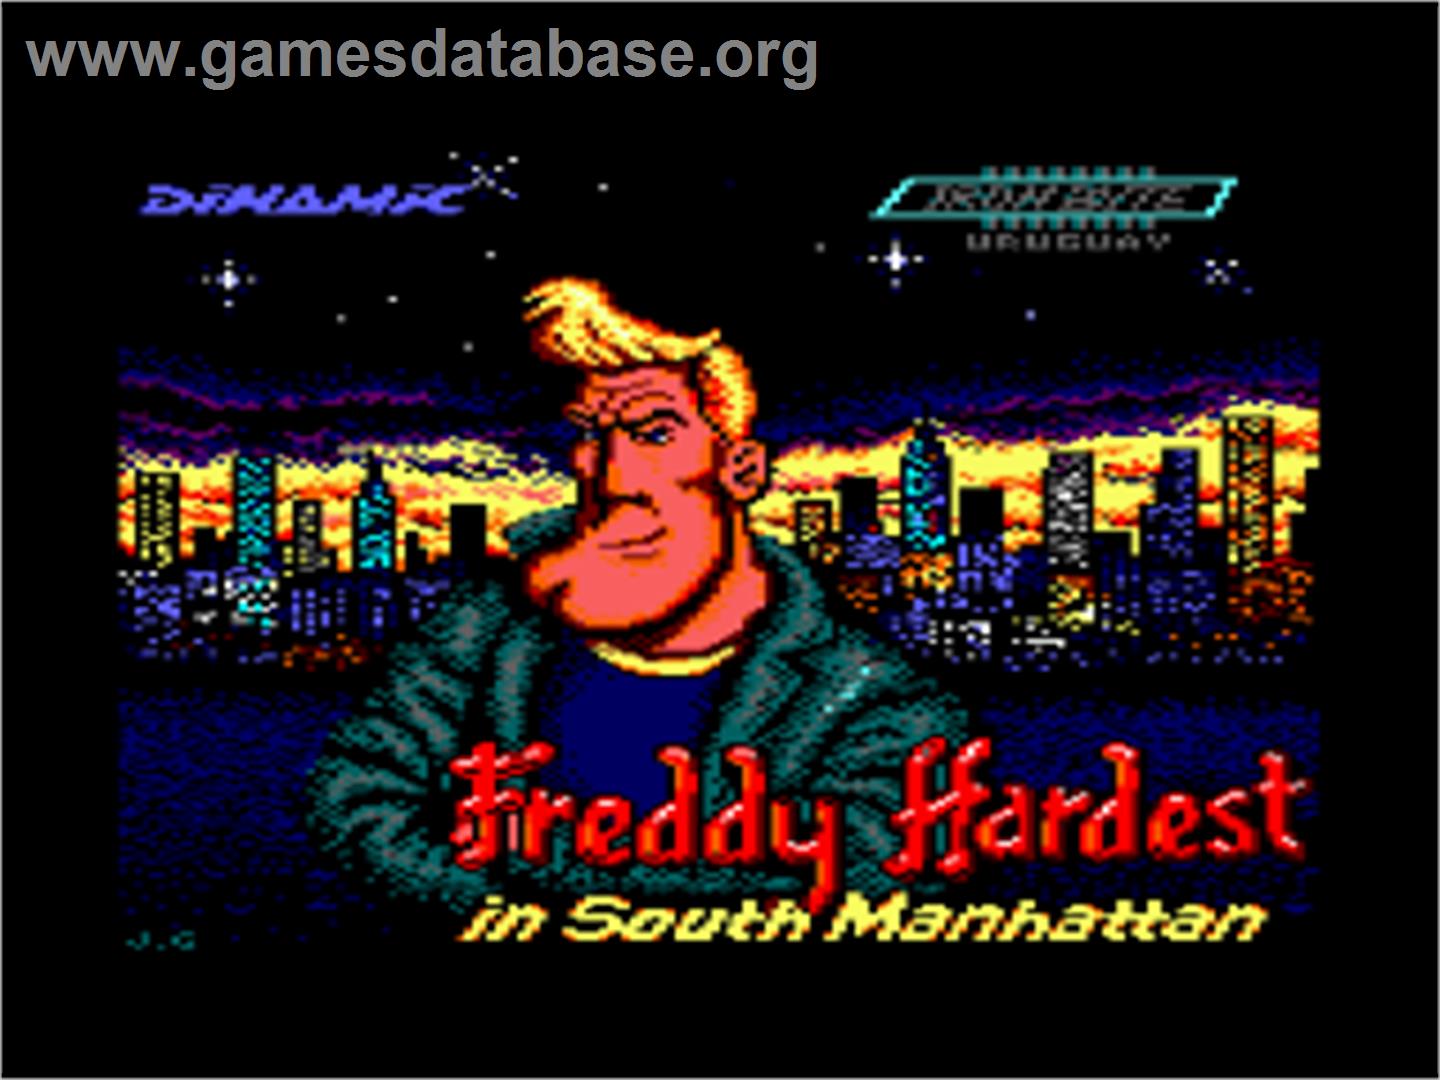 Freddy Hardest in South Manhattan - Amstrad CPC - Artwork - Title Screen